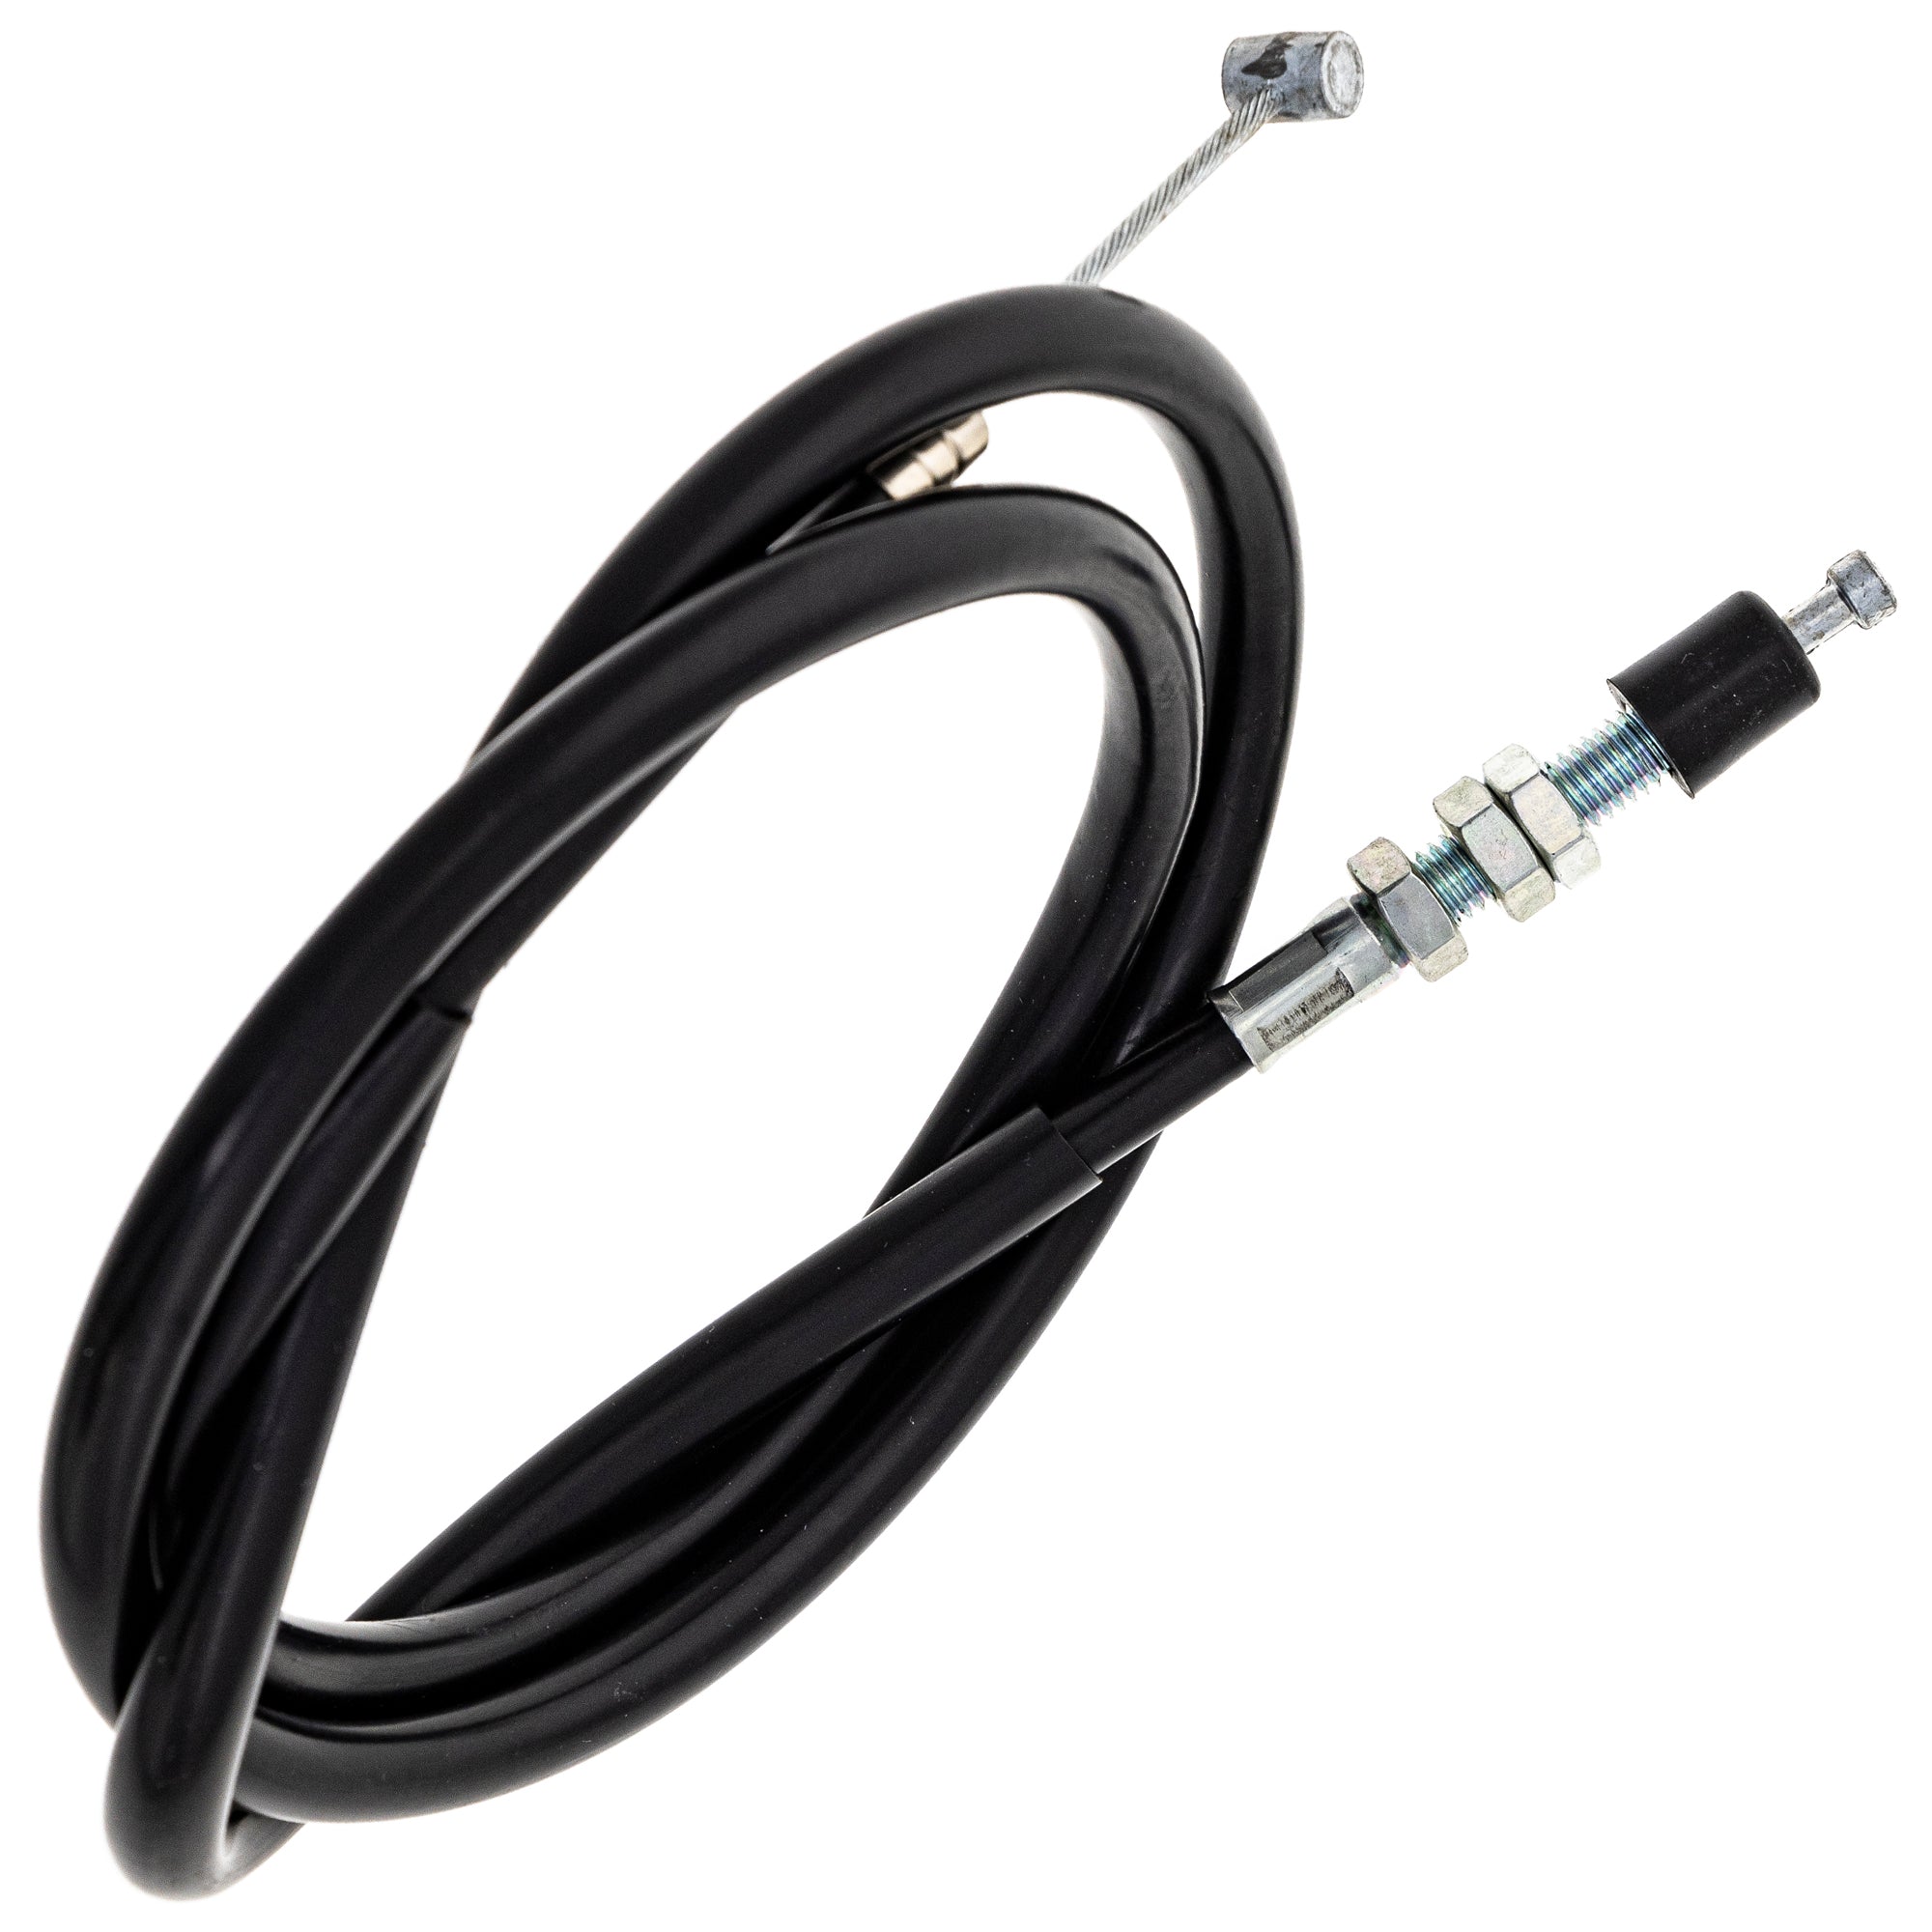 Clutch Cable for Yamaha FJ600 Seca 500 49A-26335-01-00 4U8-26335-00-00